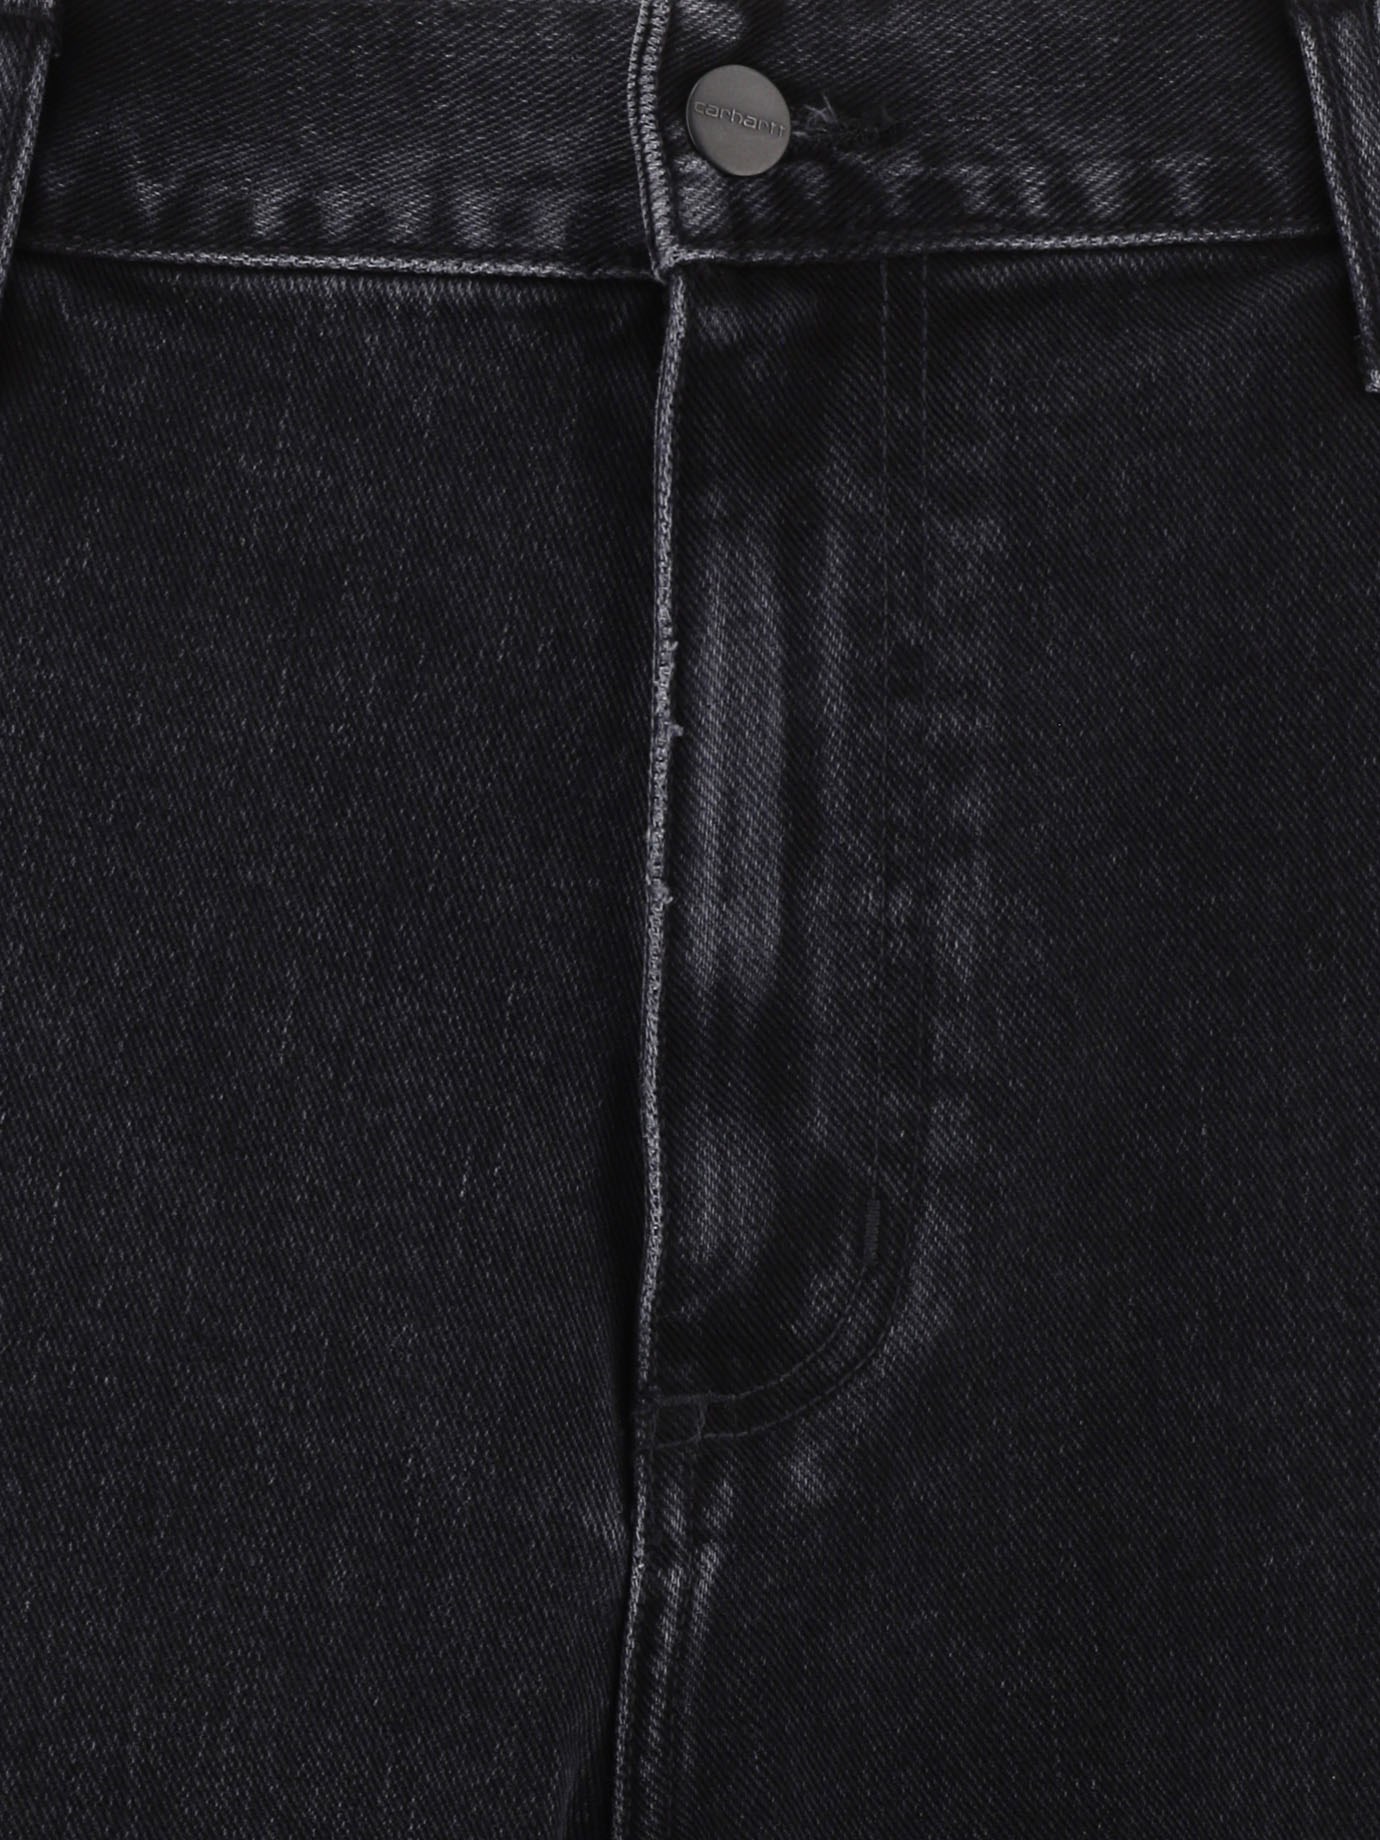 Pantaloni  Single Knee  by Carhartt WIP